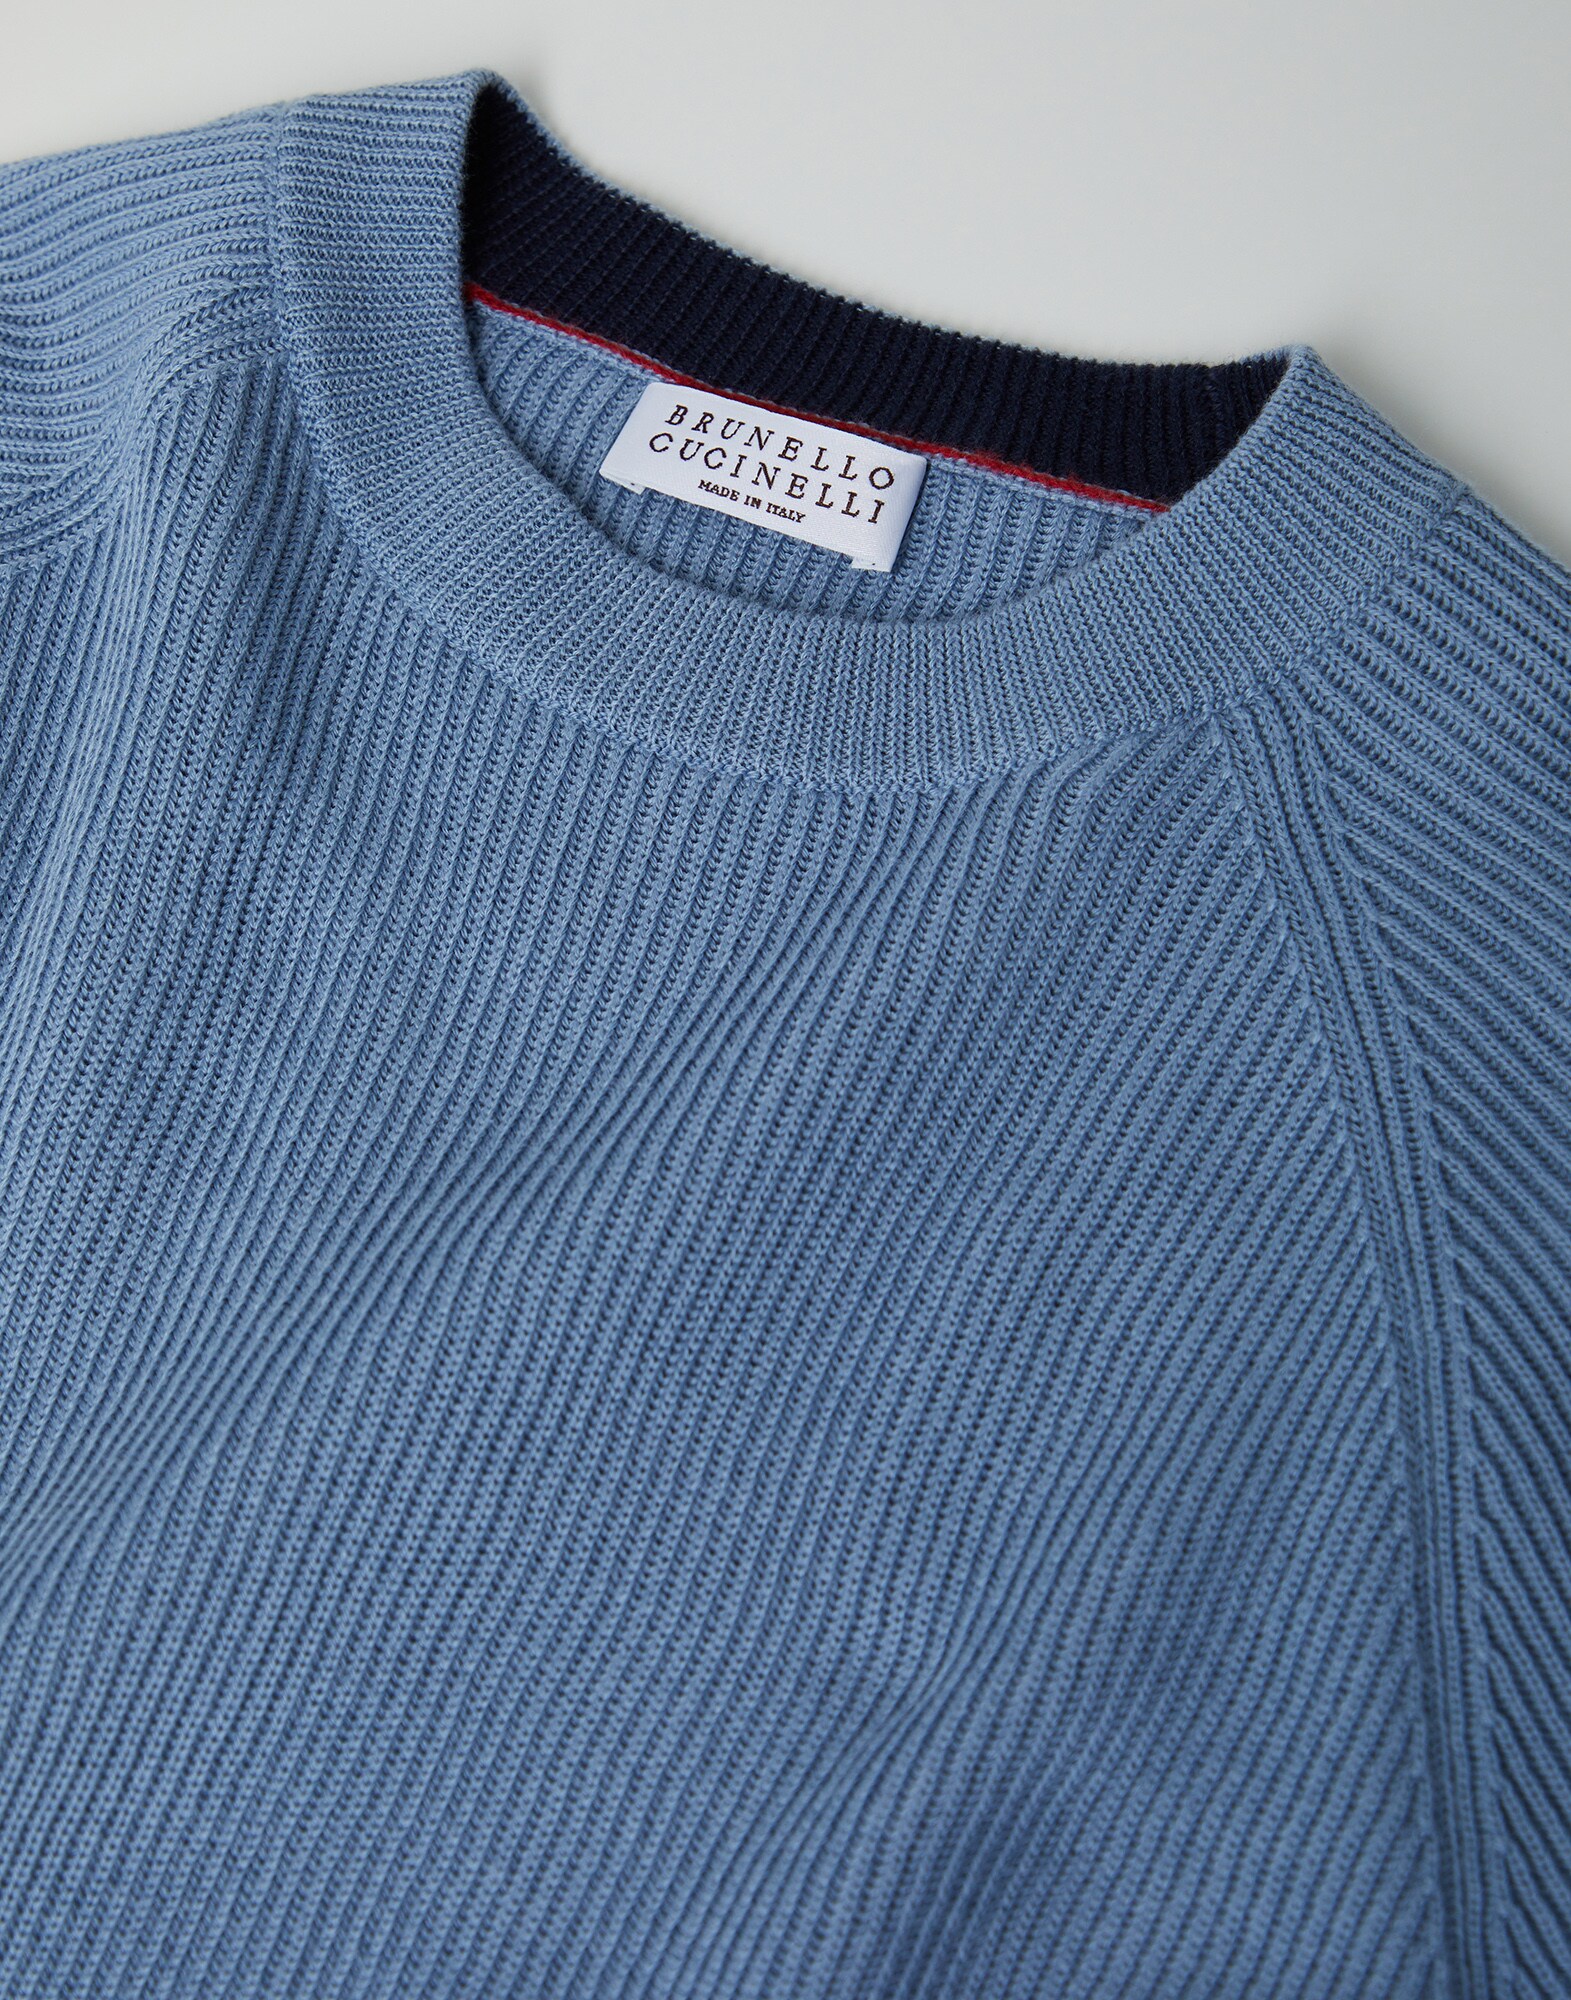 English Rib knit sweater
                            Sky Blue Boy - Brunello Cucinelli
                        